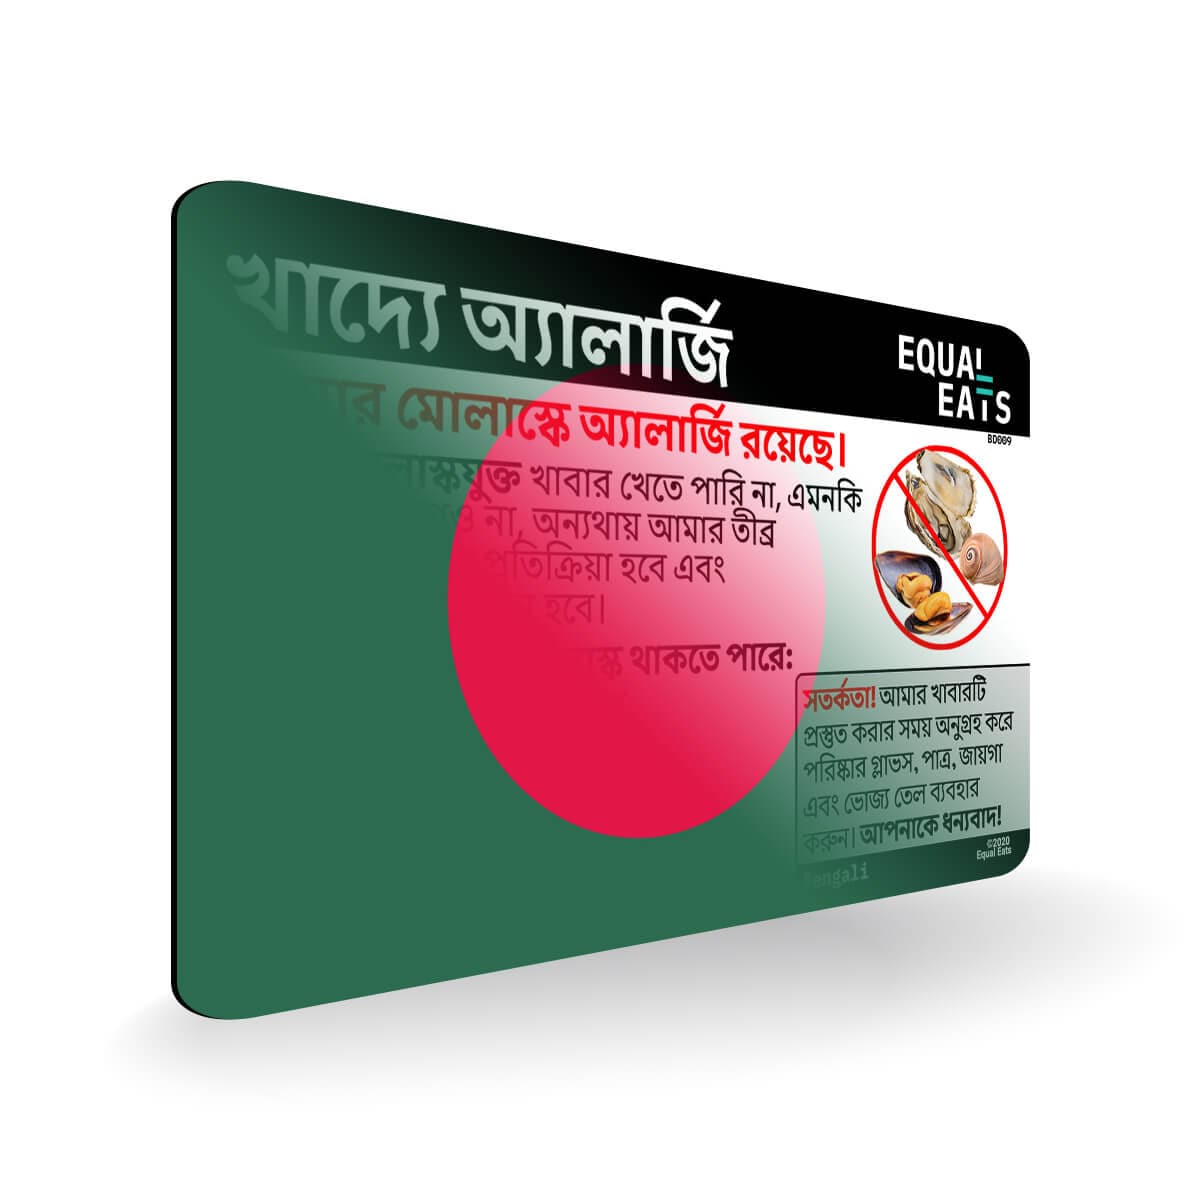 Mollusk Allergy in Bengali. Mollusk Allergy Card for Bangladesh